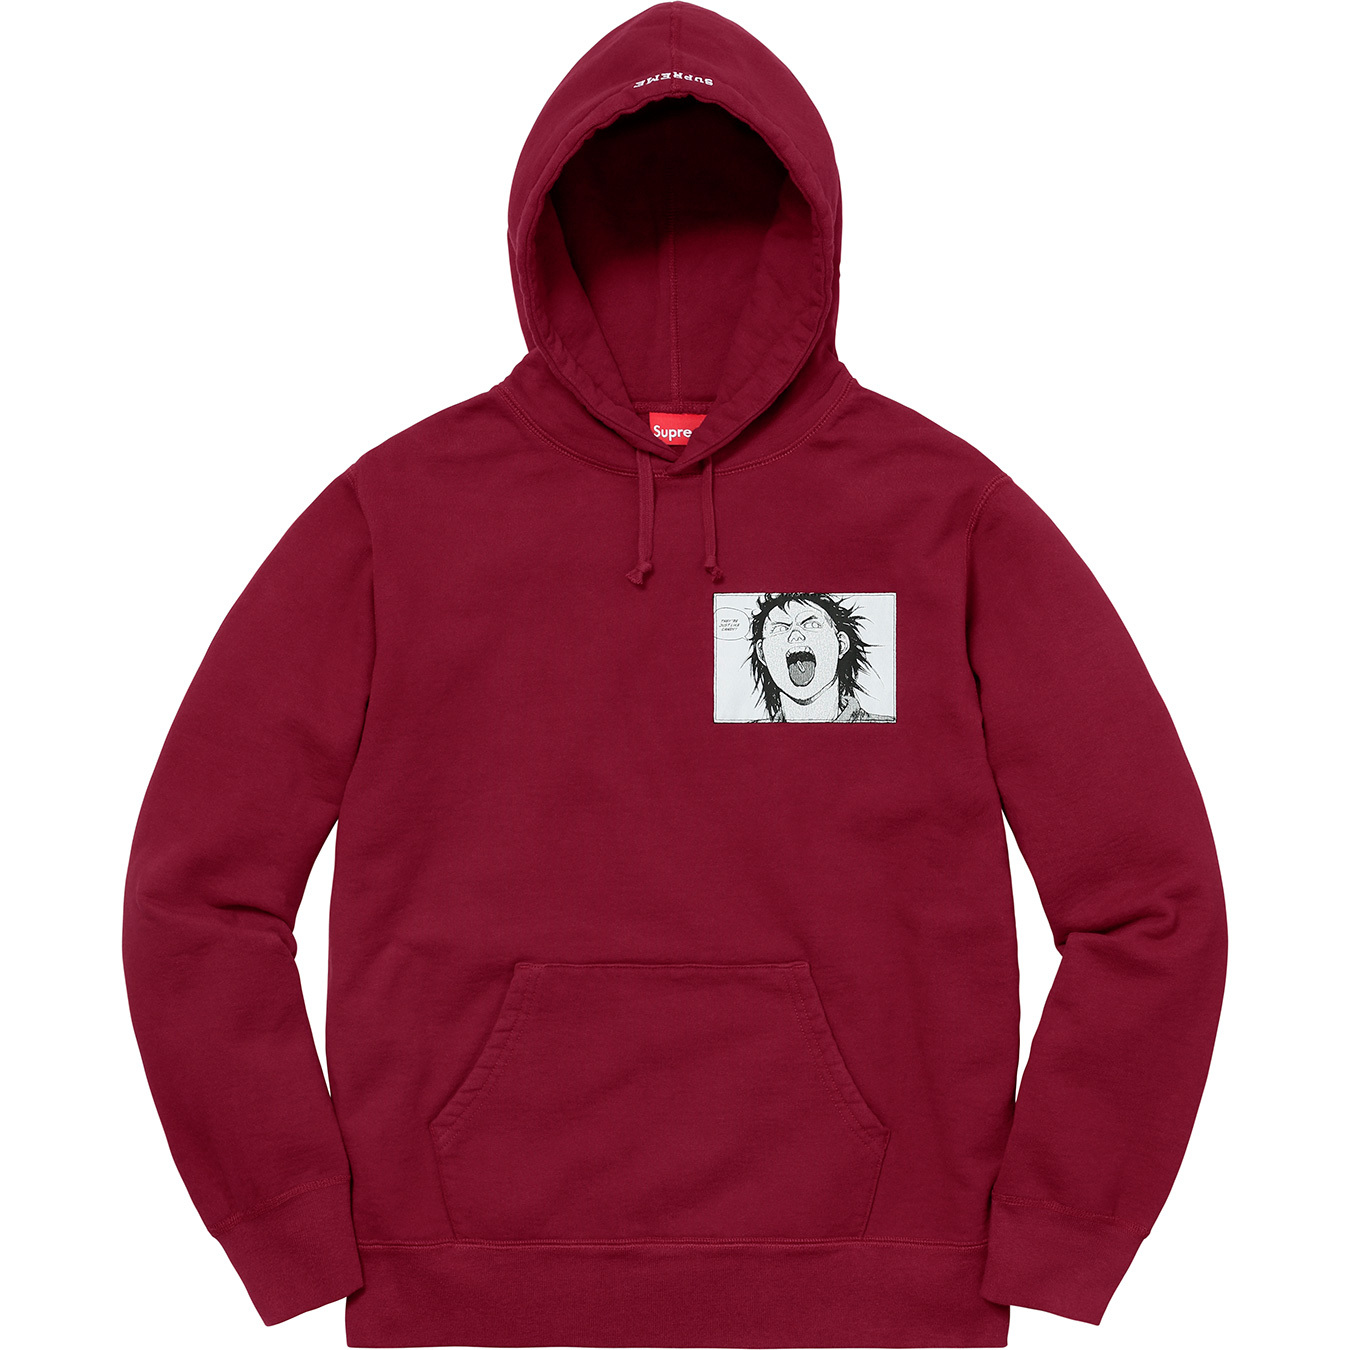 AKIRA/Supreme Patches Hooded Sweatshirts